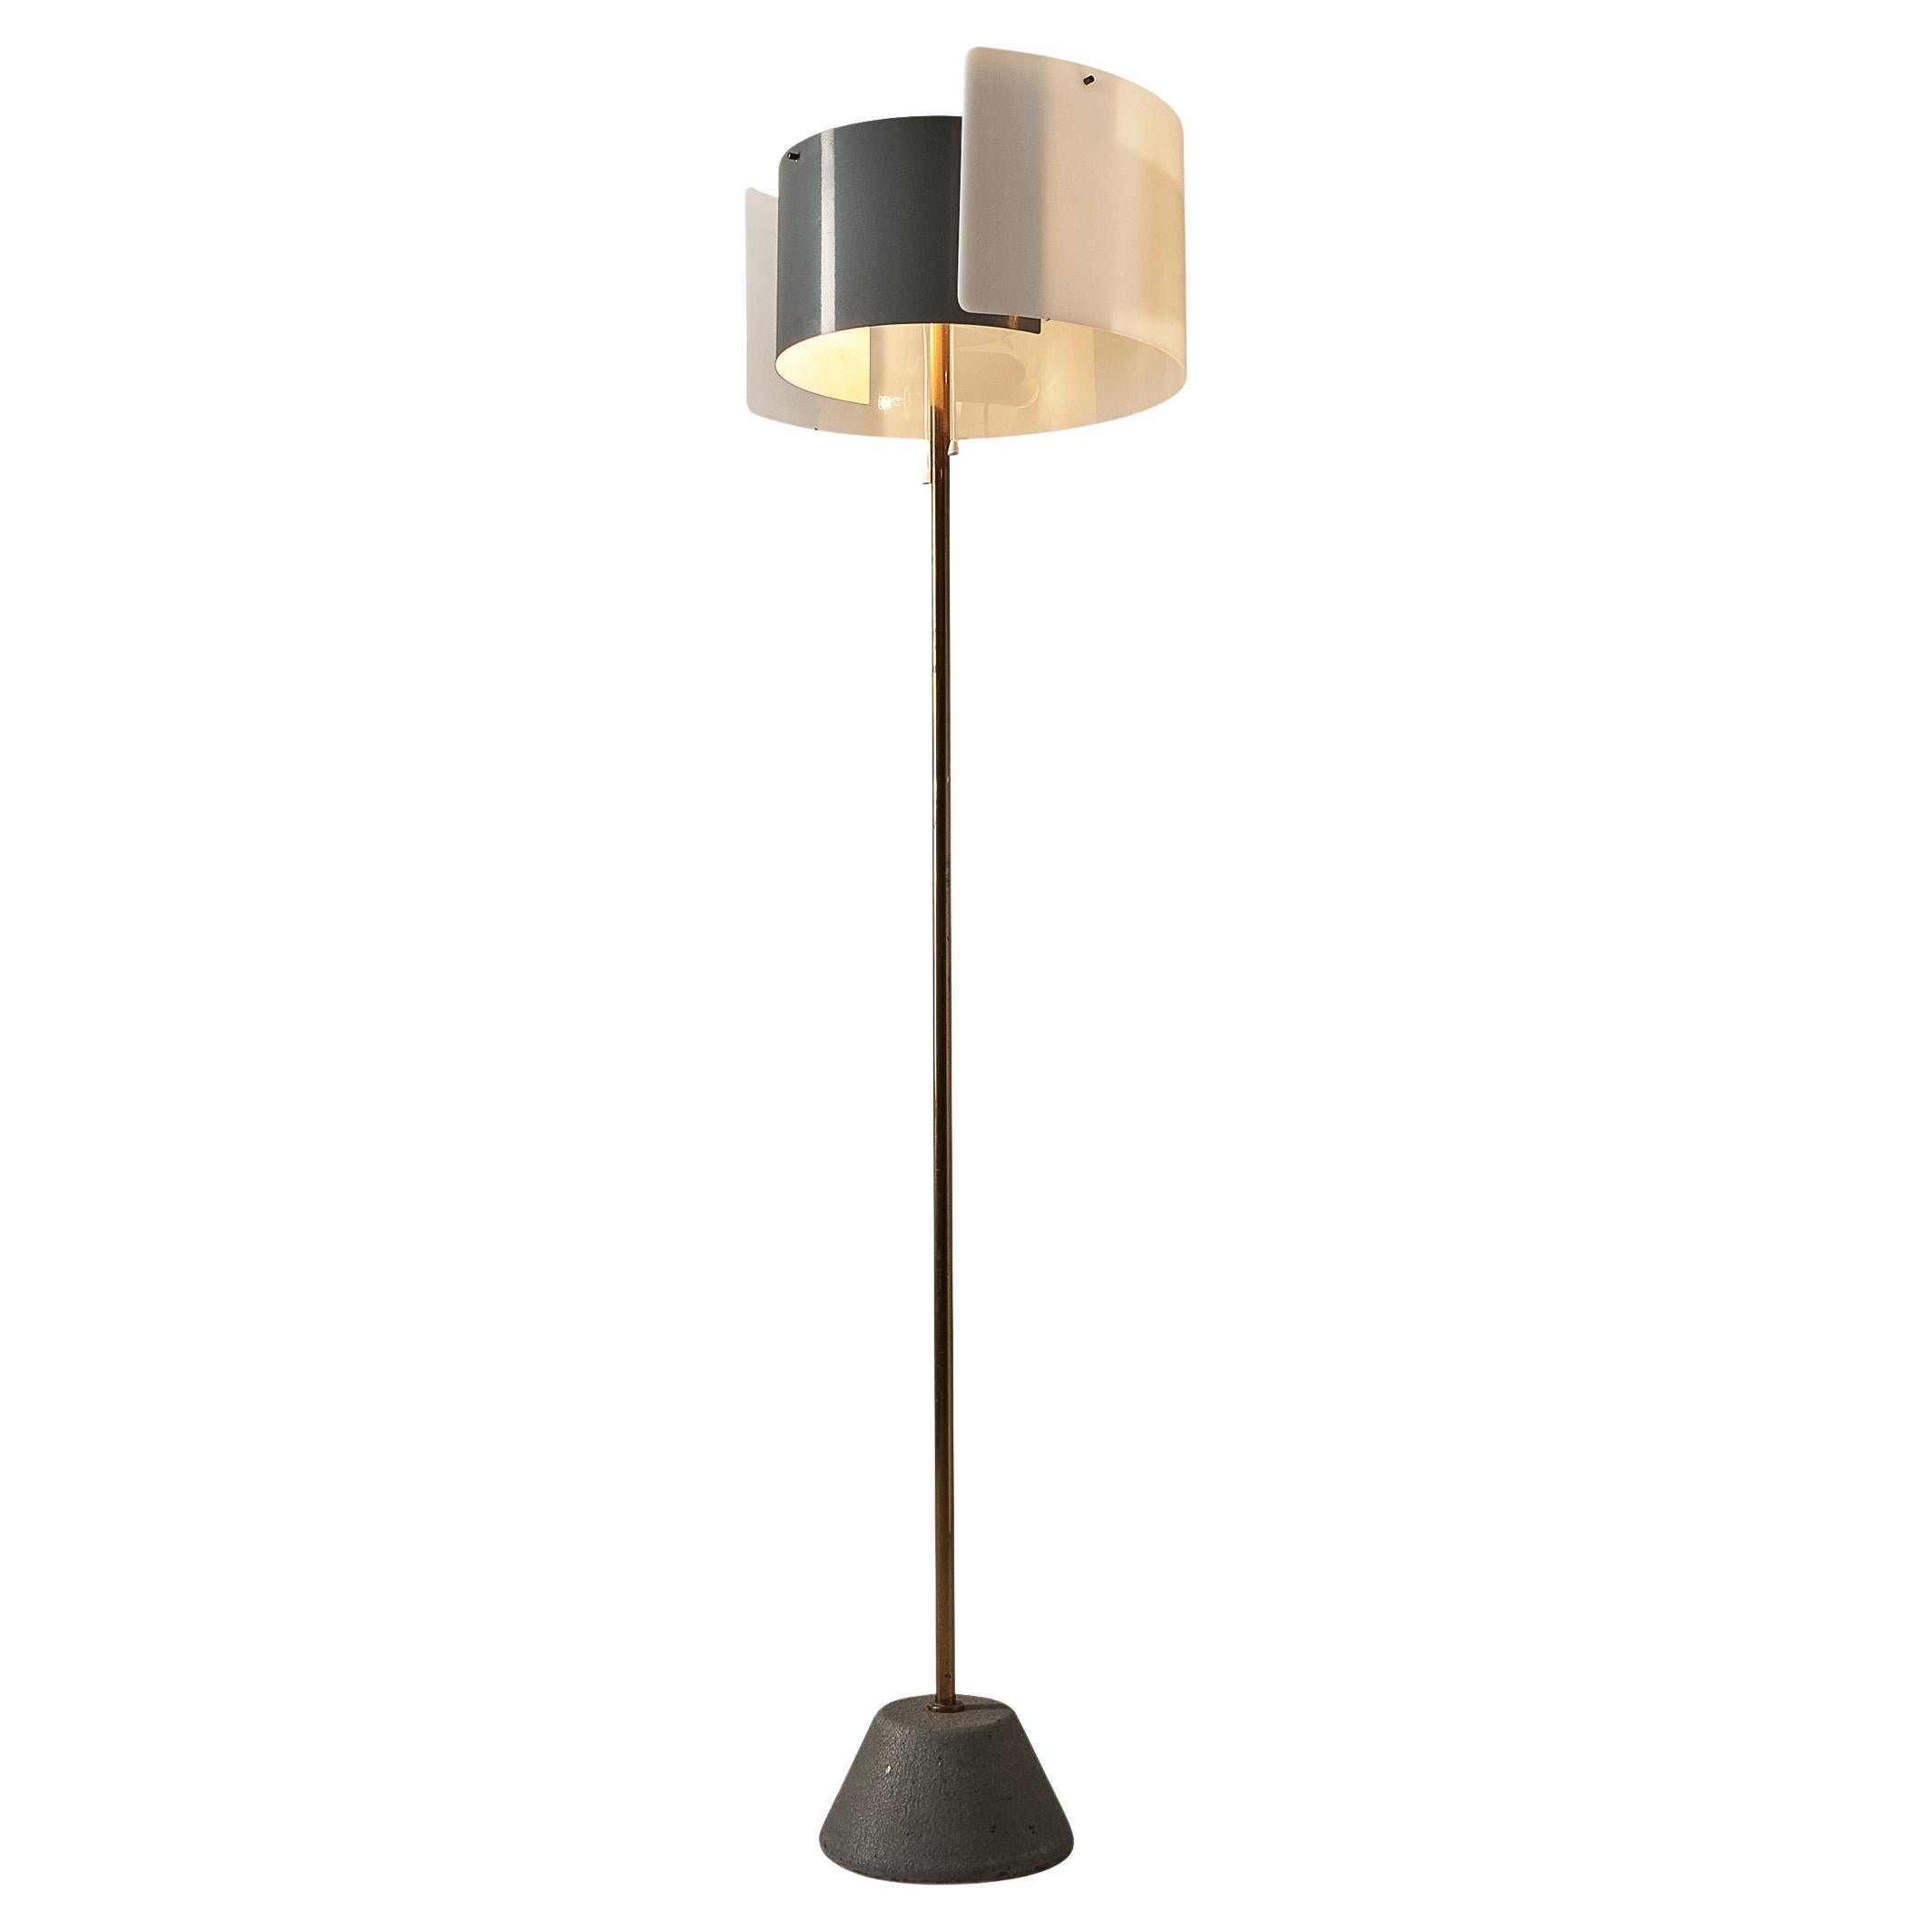 Gino Sarfatti for Arteluce Floor Lamp Model '1056' in Brass and Aluminum